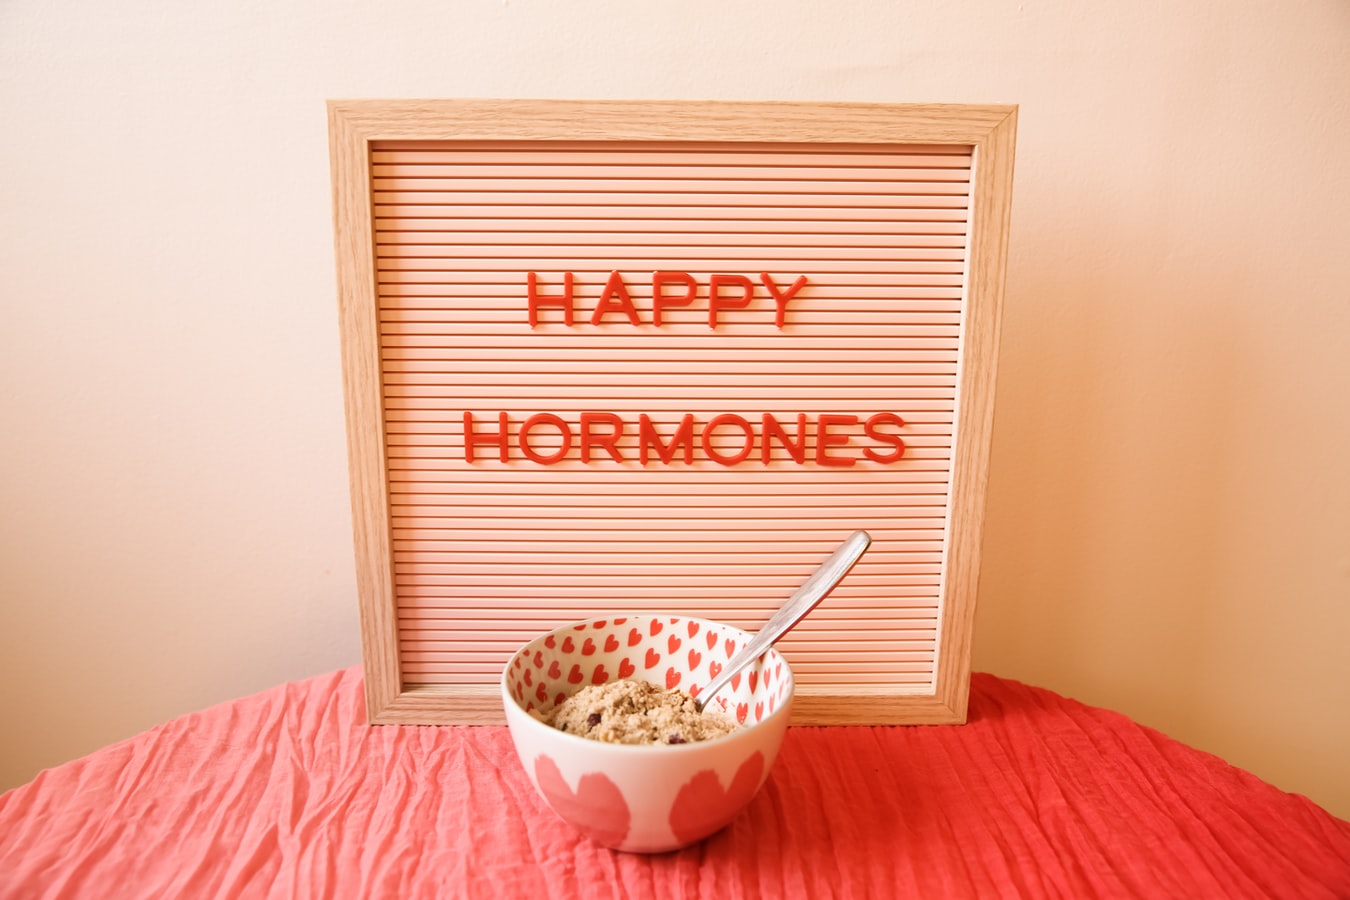 sign that reads "happy hormones"